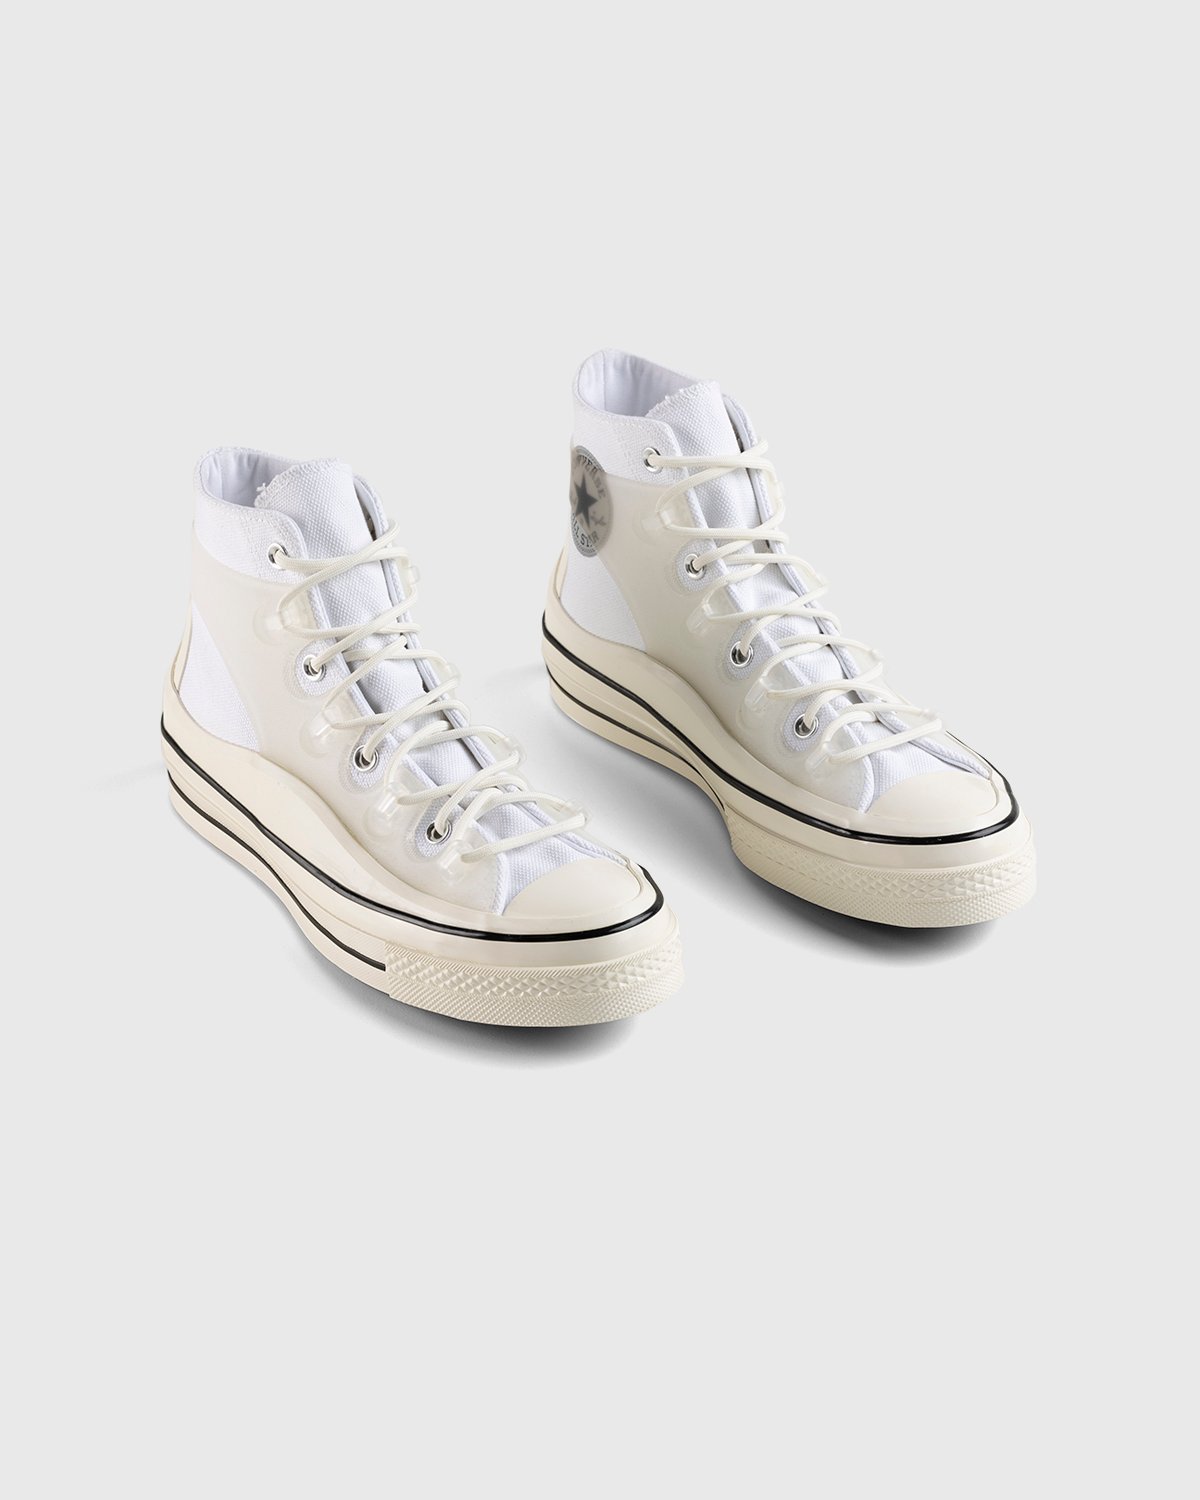 Converse - Chuck 70 Utility Hi White/Egret/Black - Footwear - White - Image 3